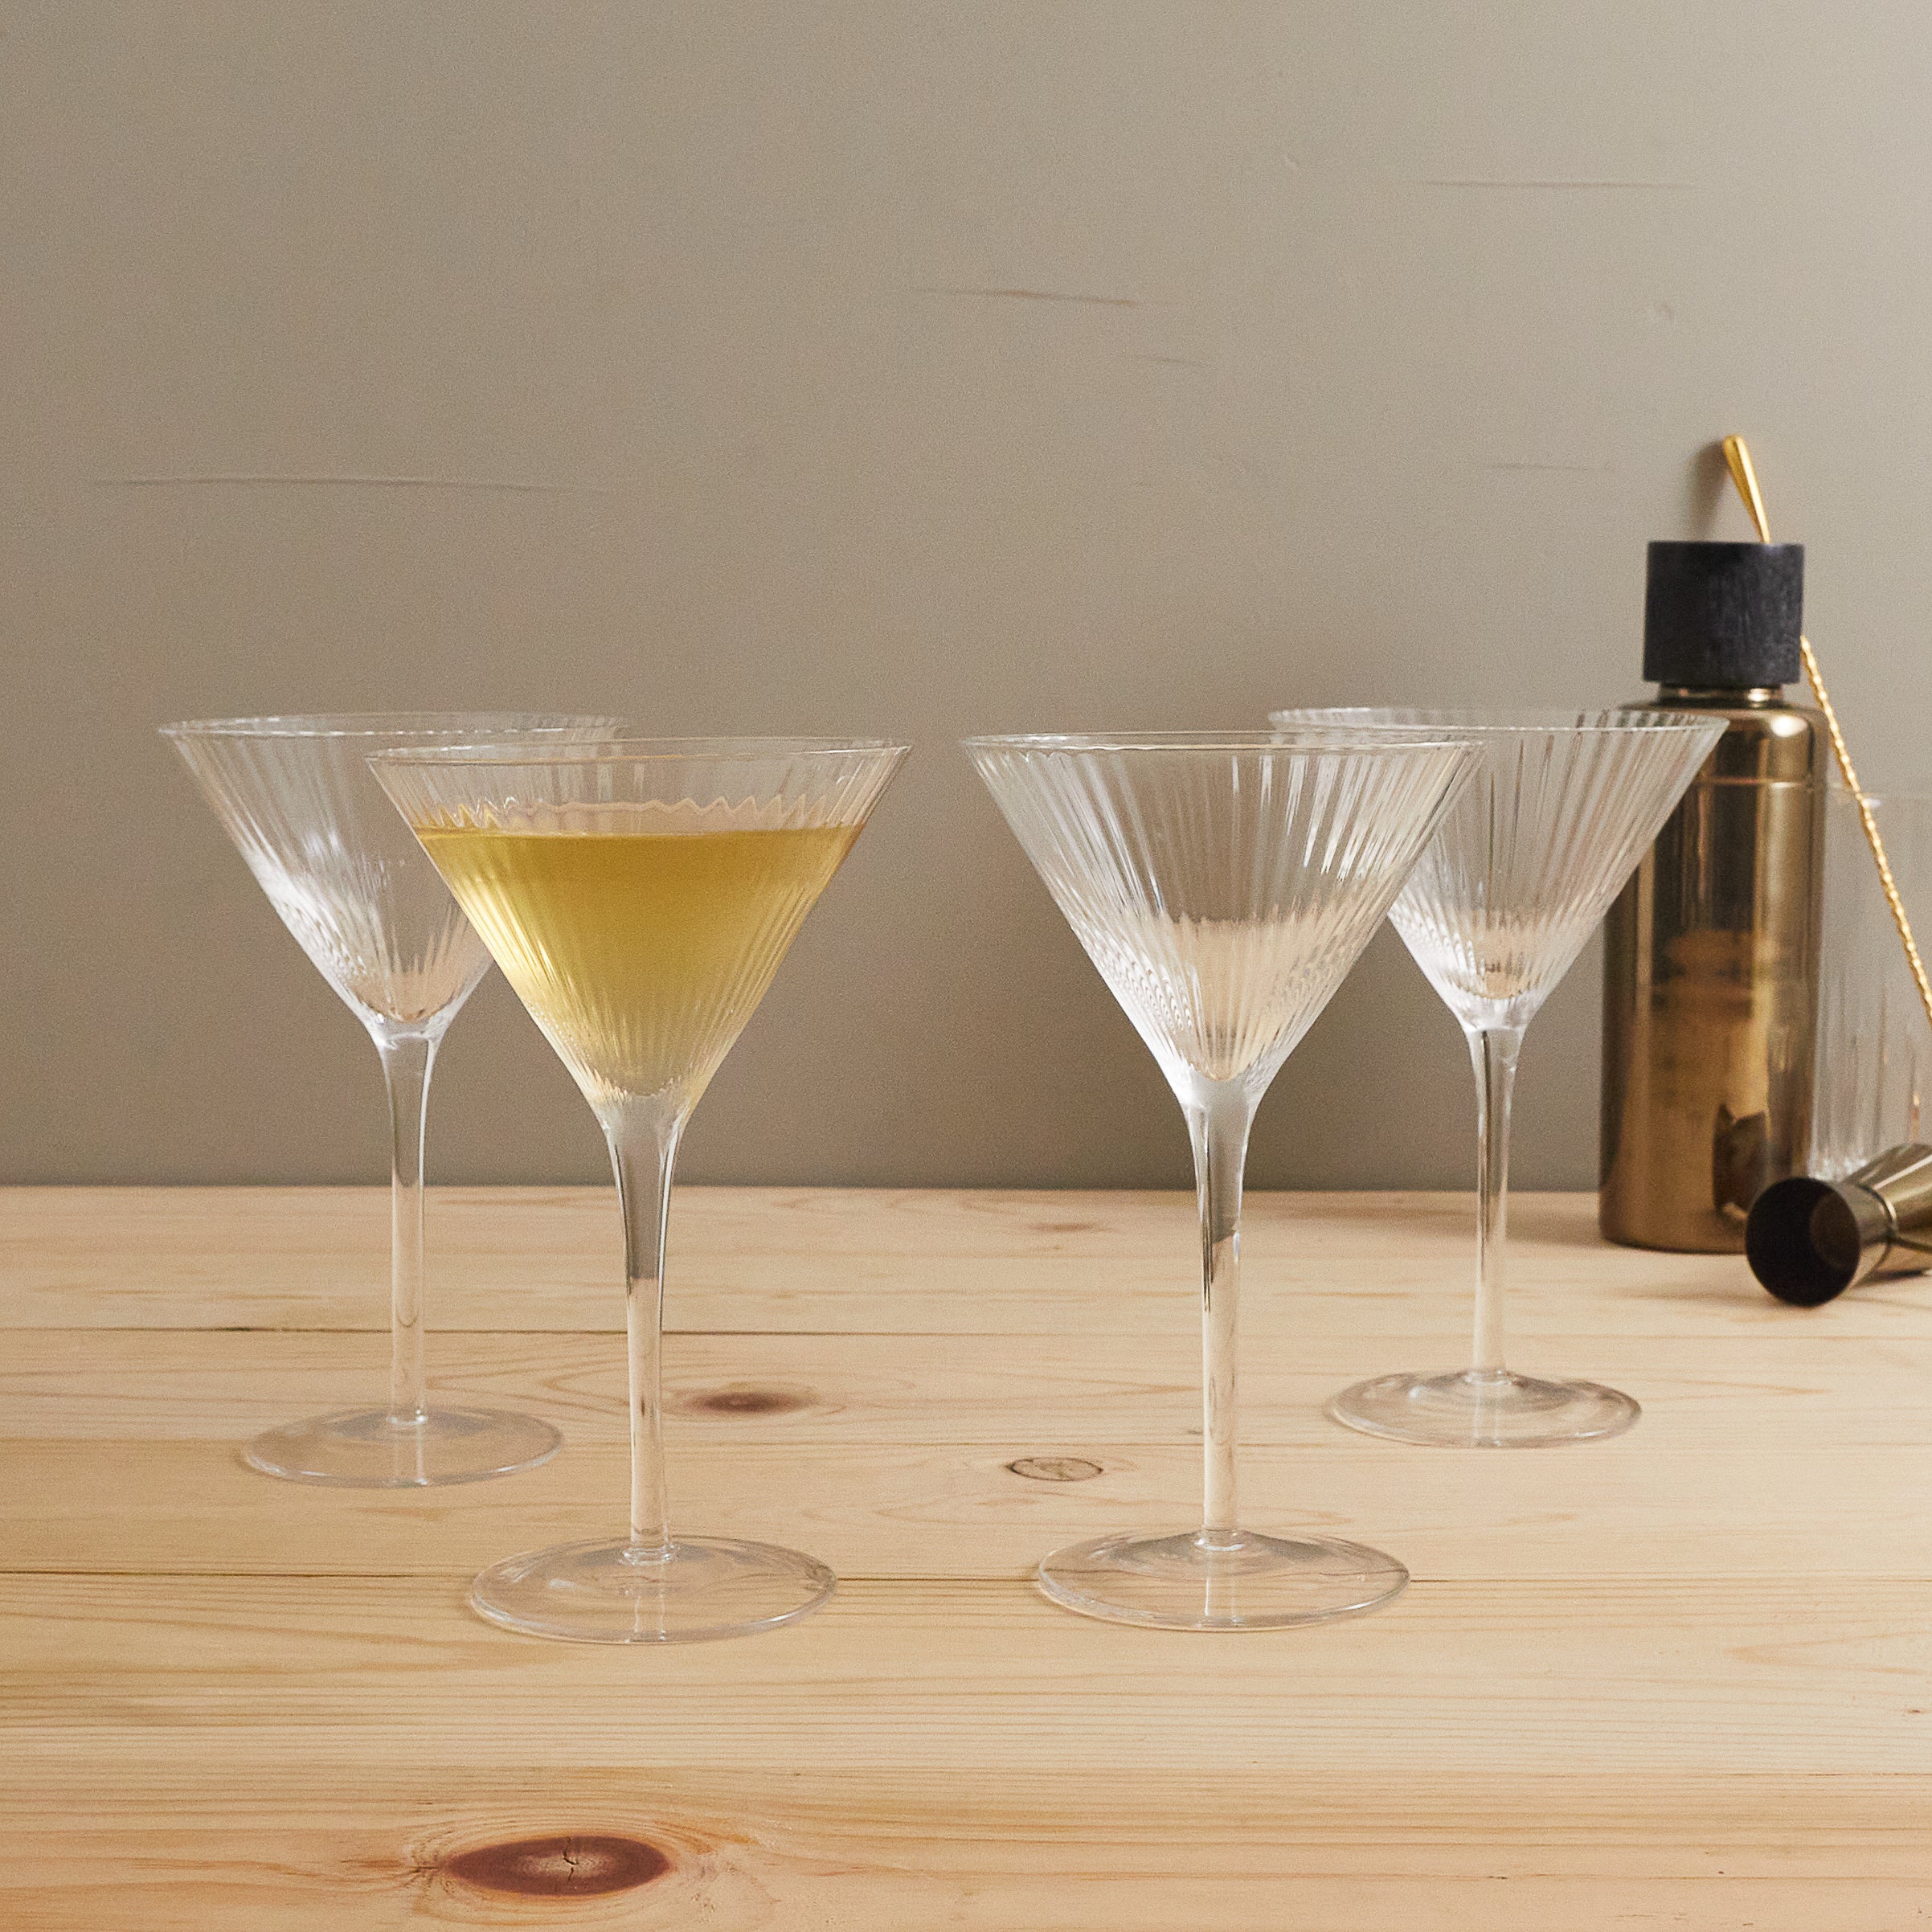 Set Of 4 Ribbed Martini Glasses With Gold Rim  Vintage cocktail glasses,  Glassware, Martini